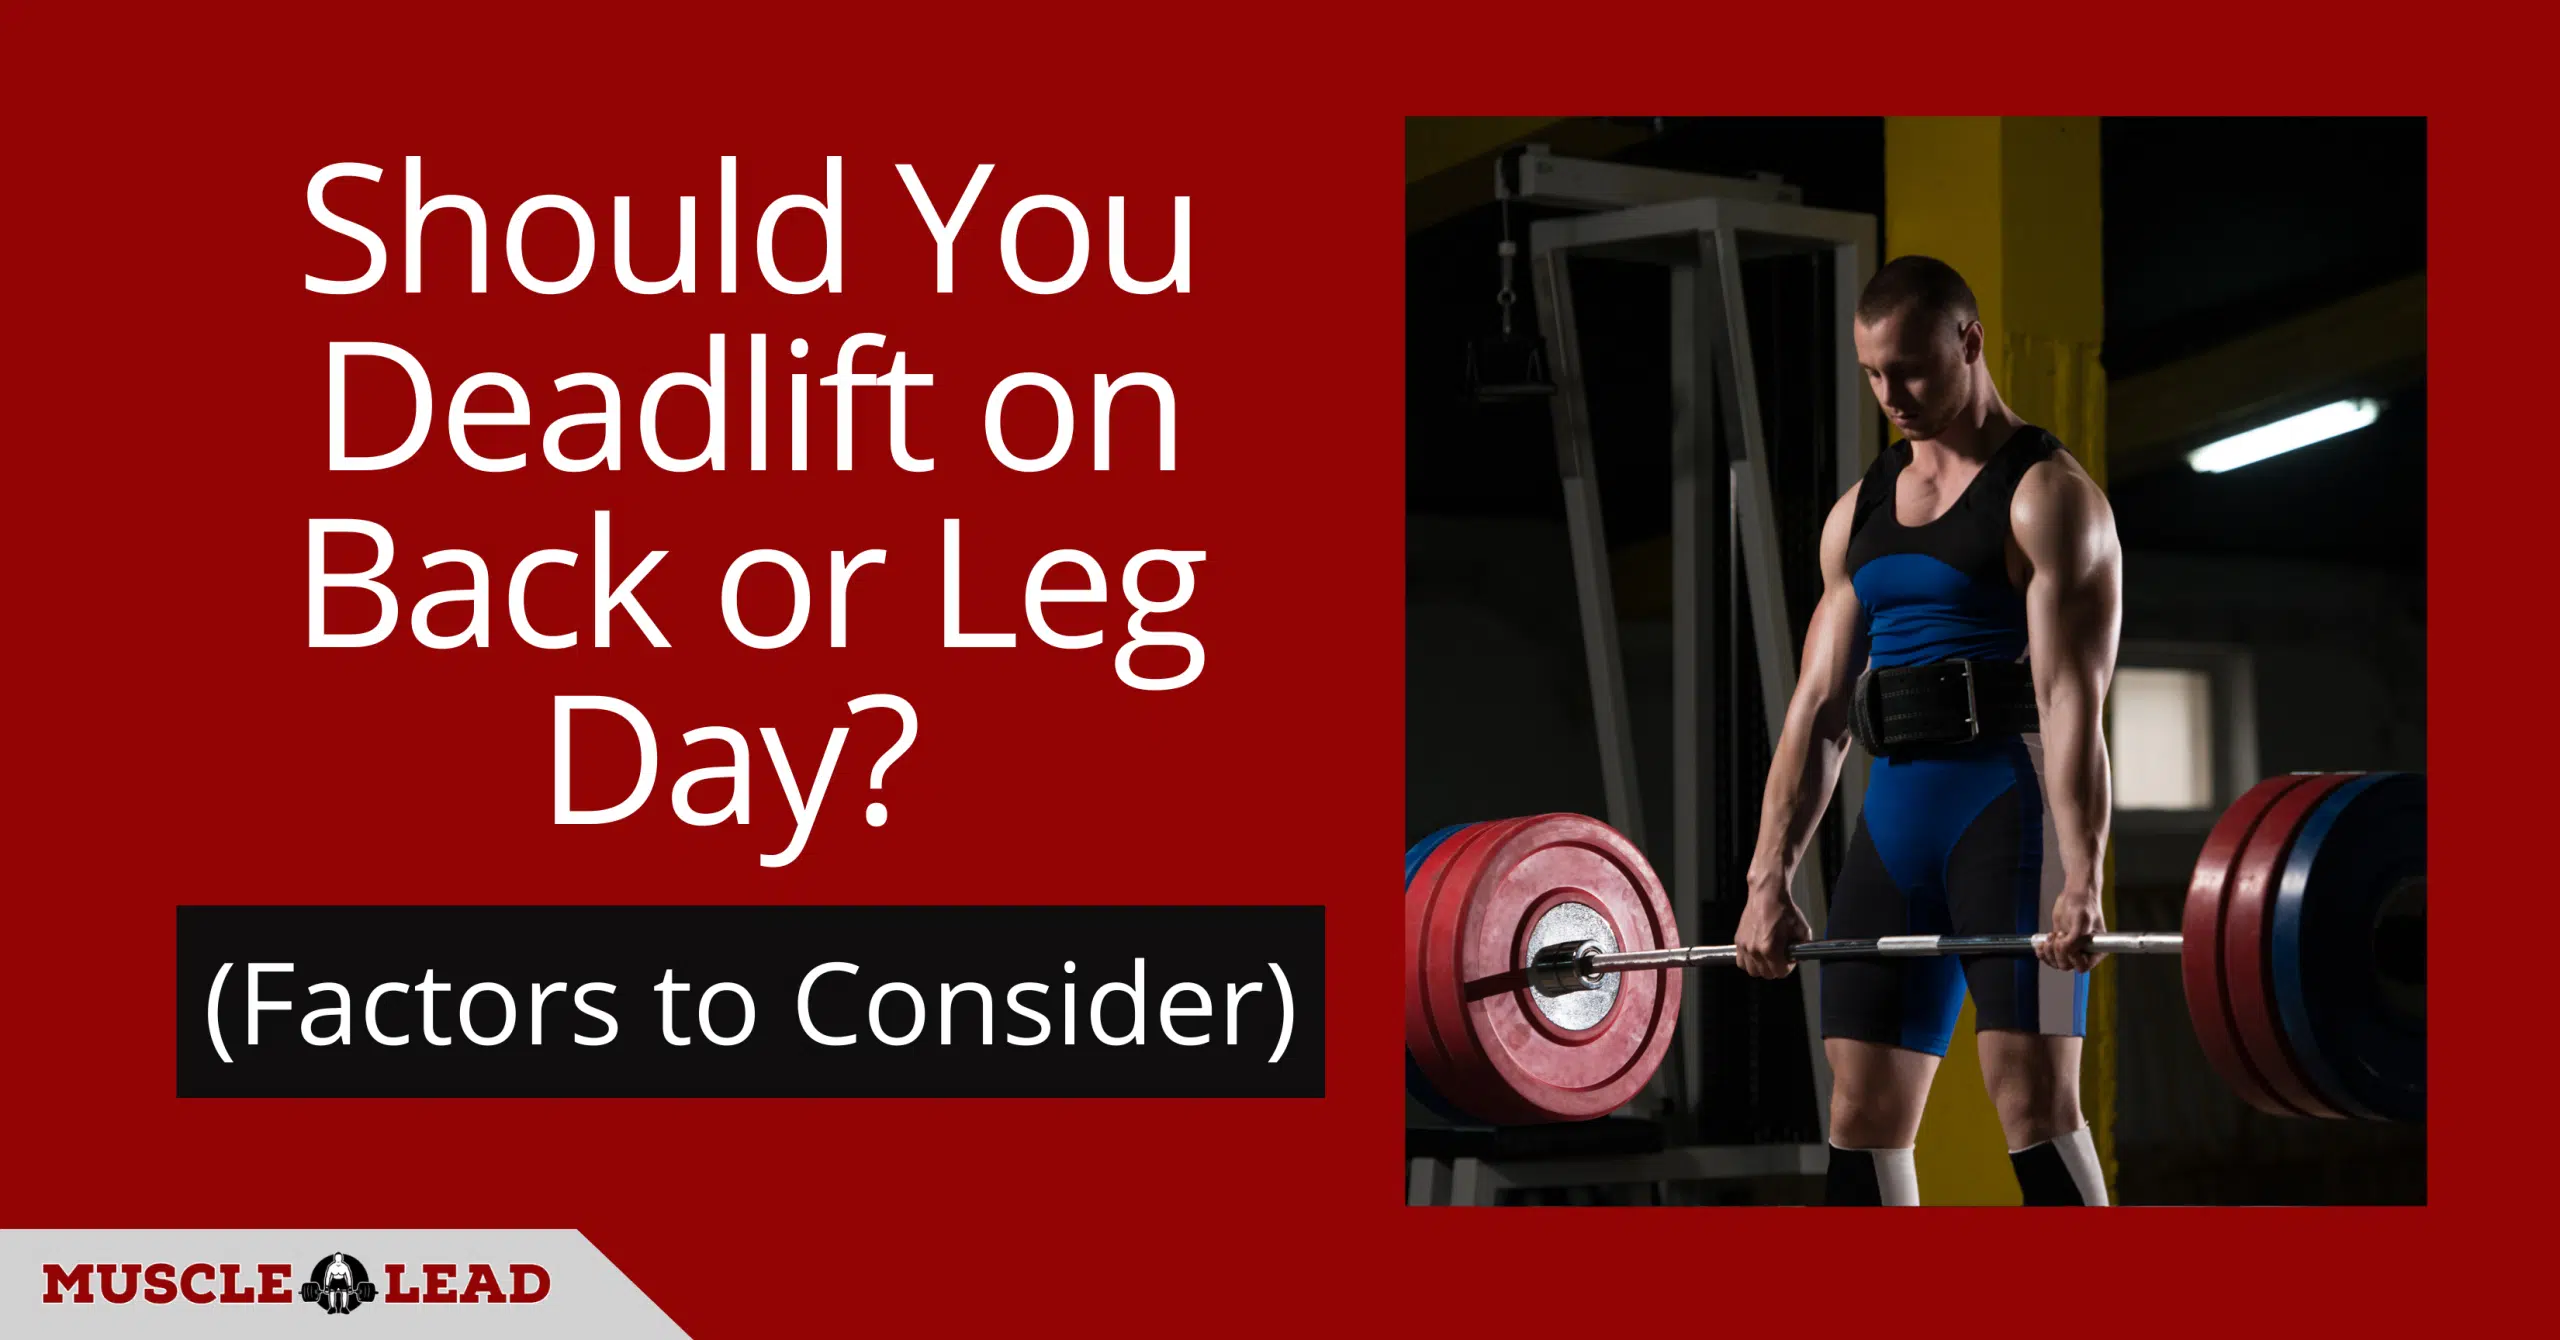 Should You Deadlift on Back or Leg Day